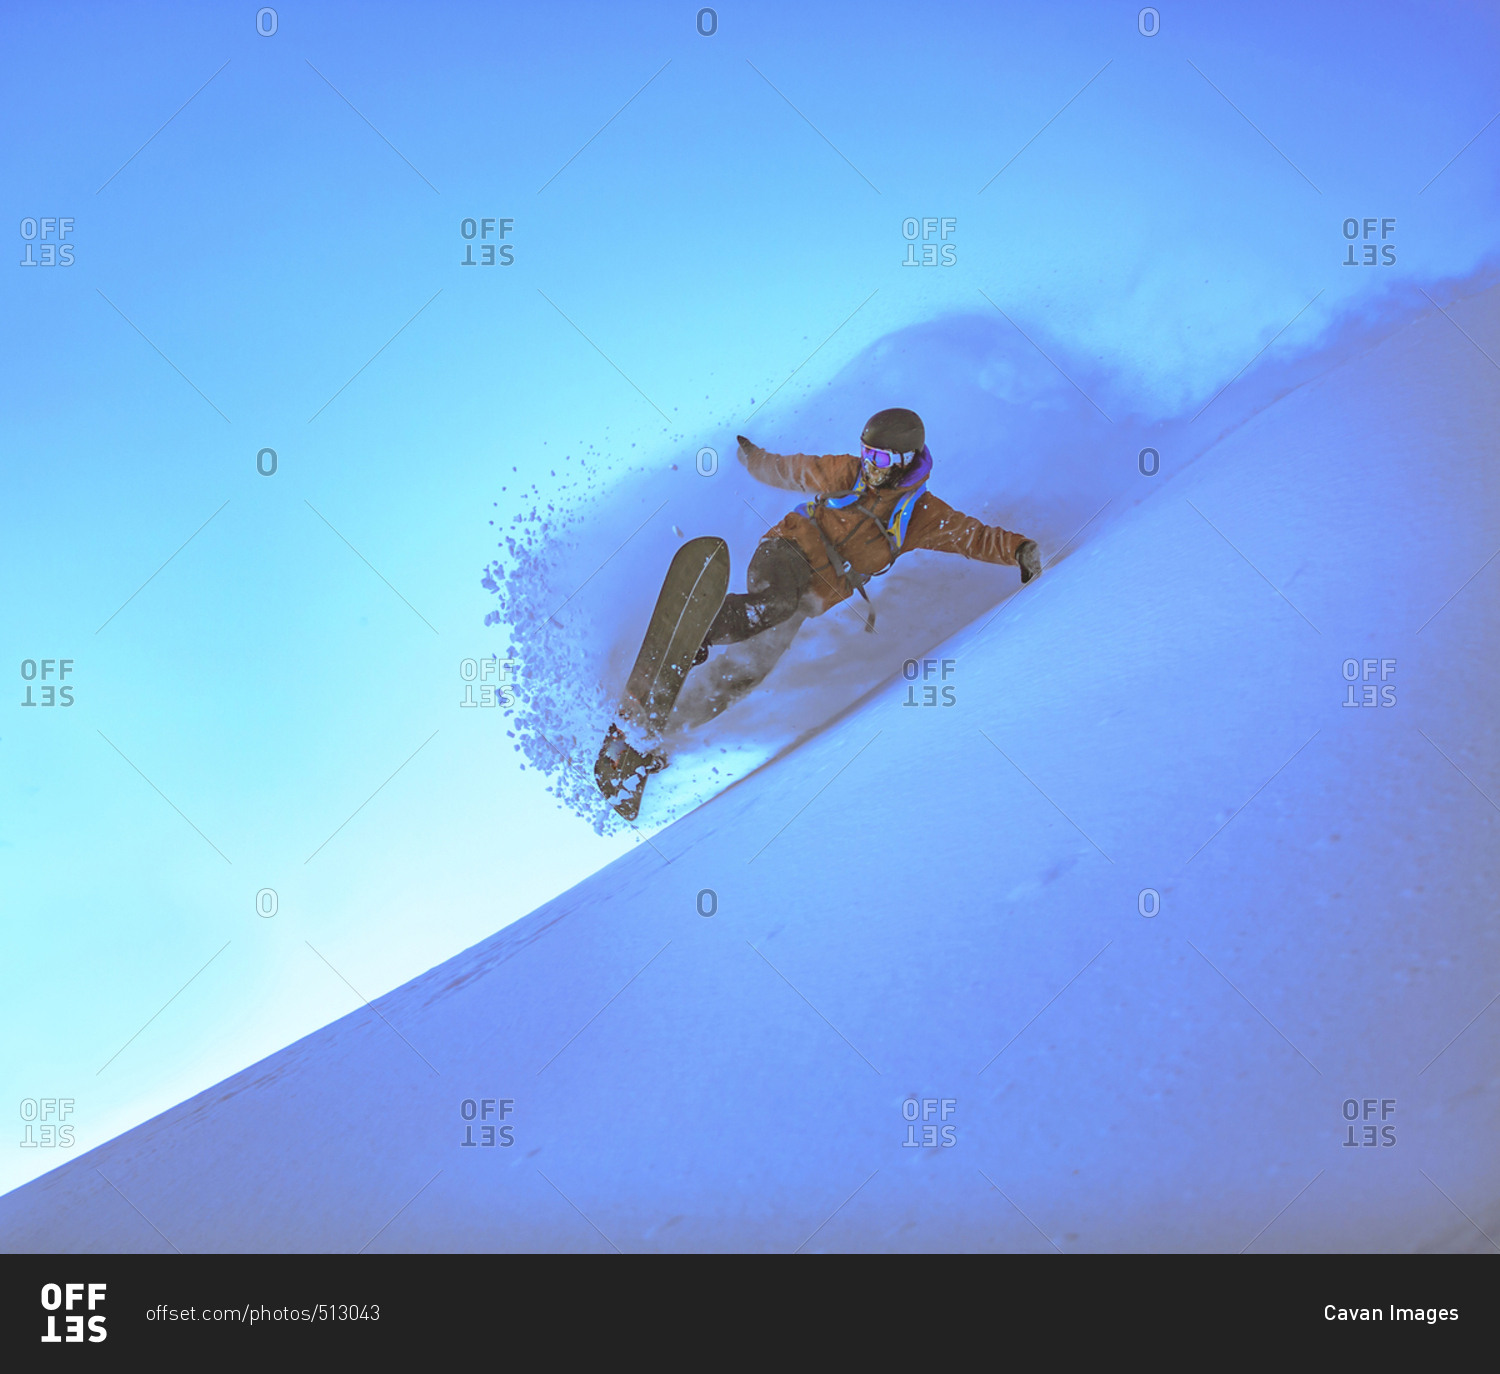 Man snowboarding against clear sky